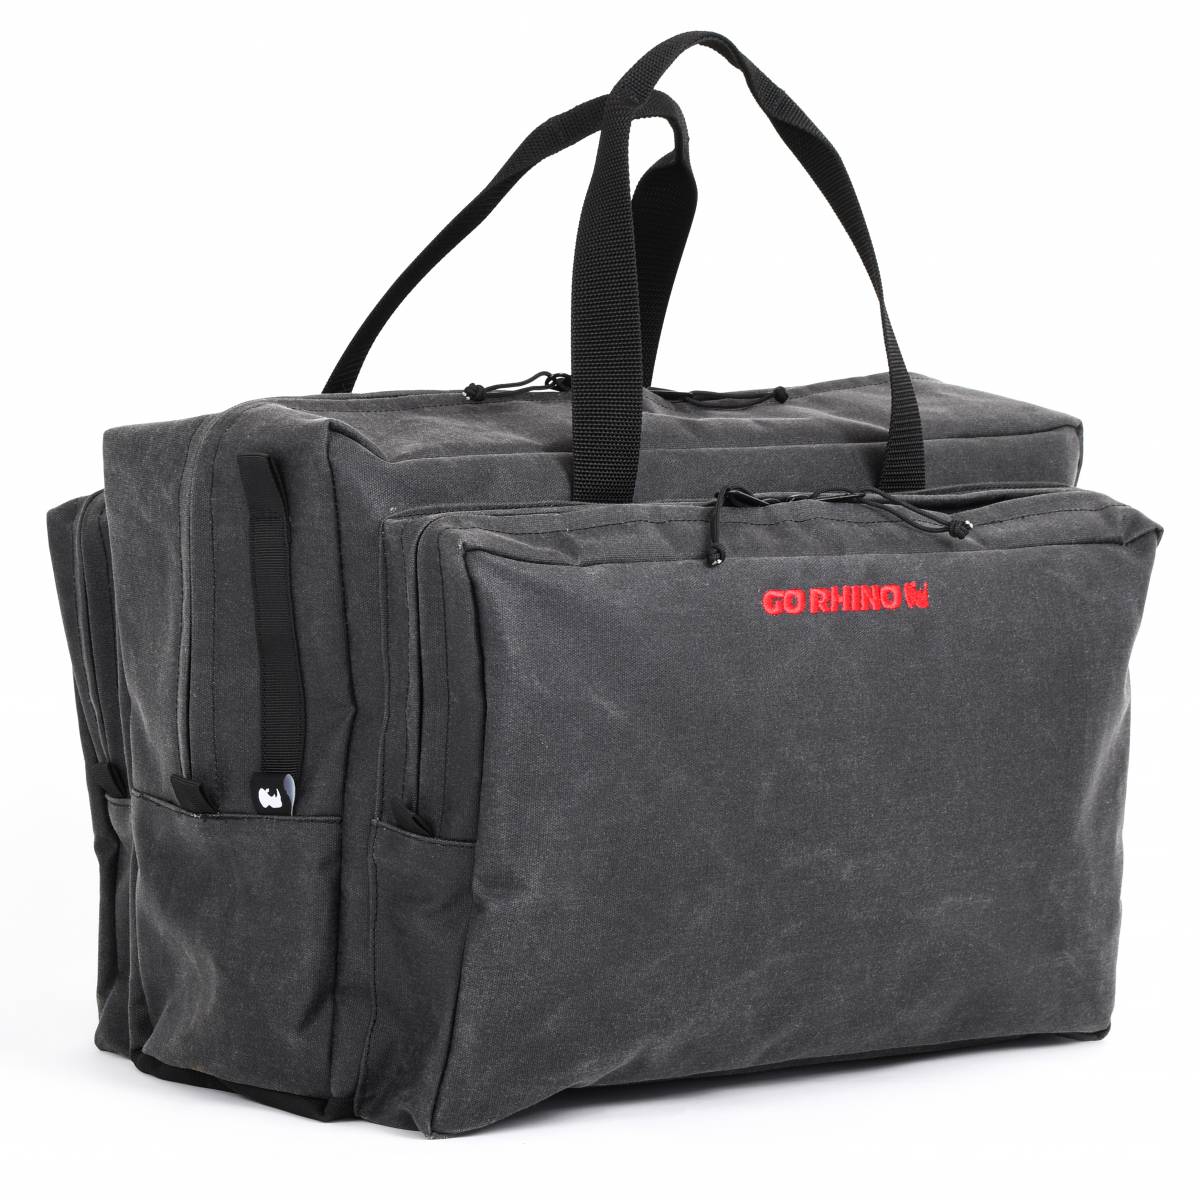 XVenture Gear Bag - Large